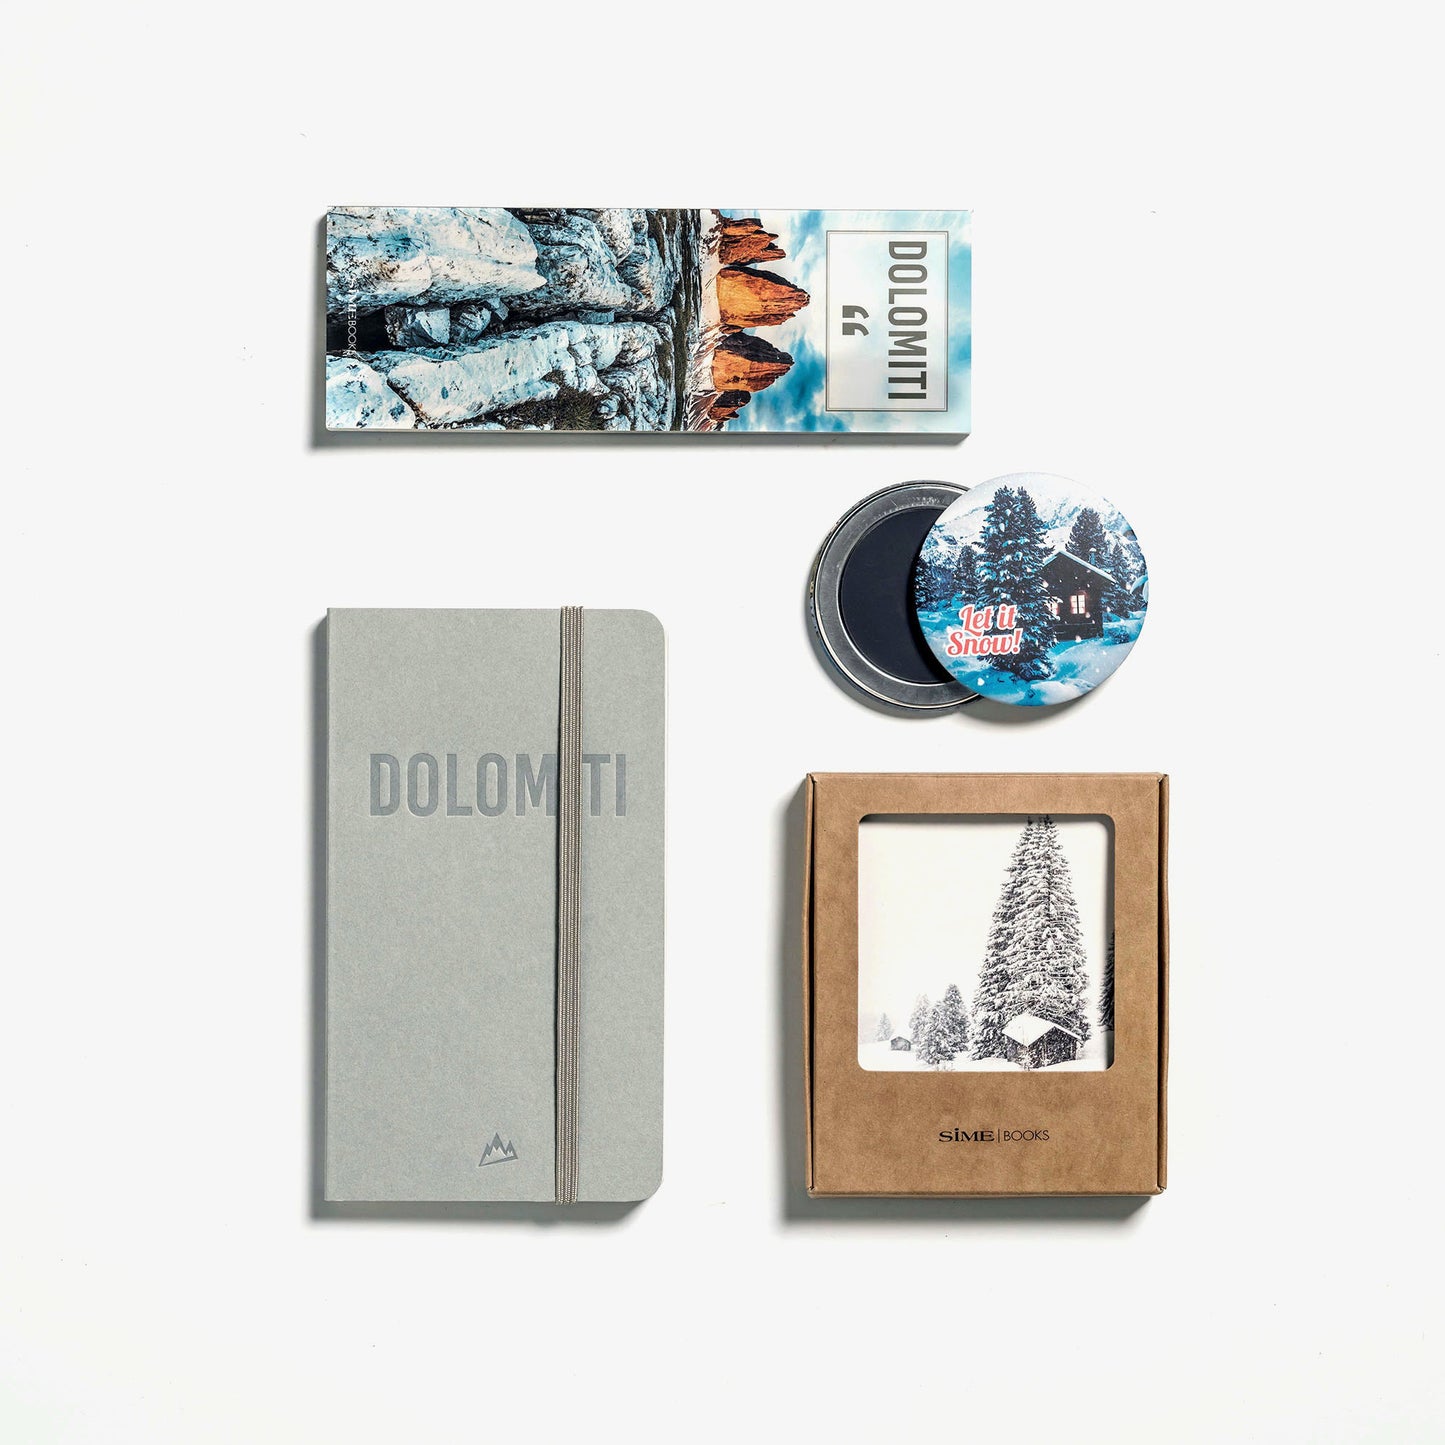 Dolomites package